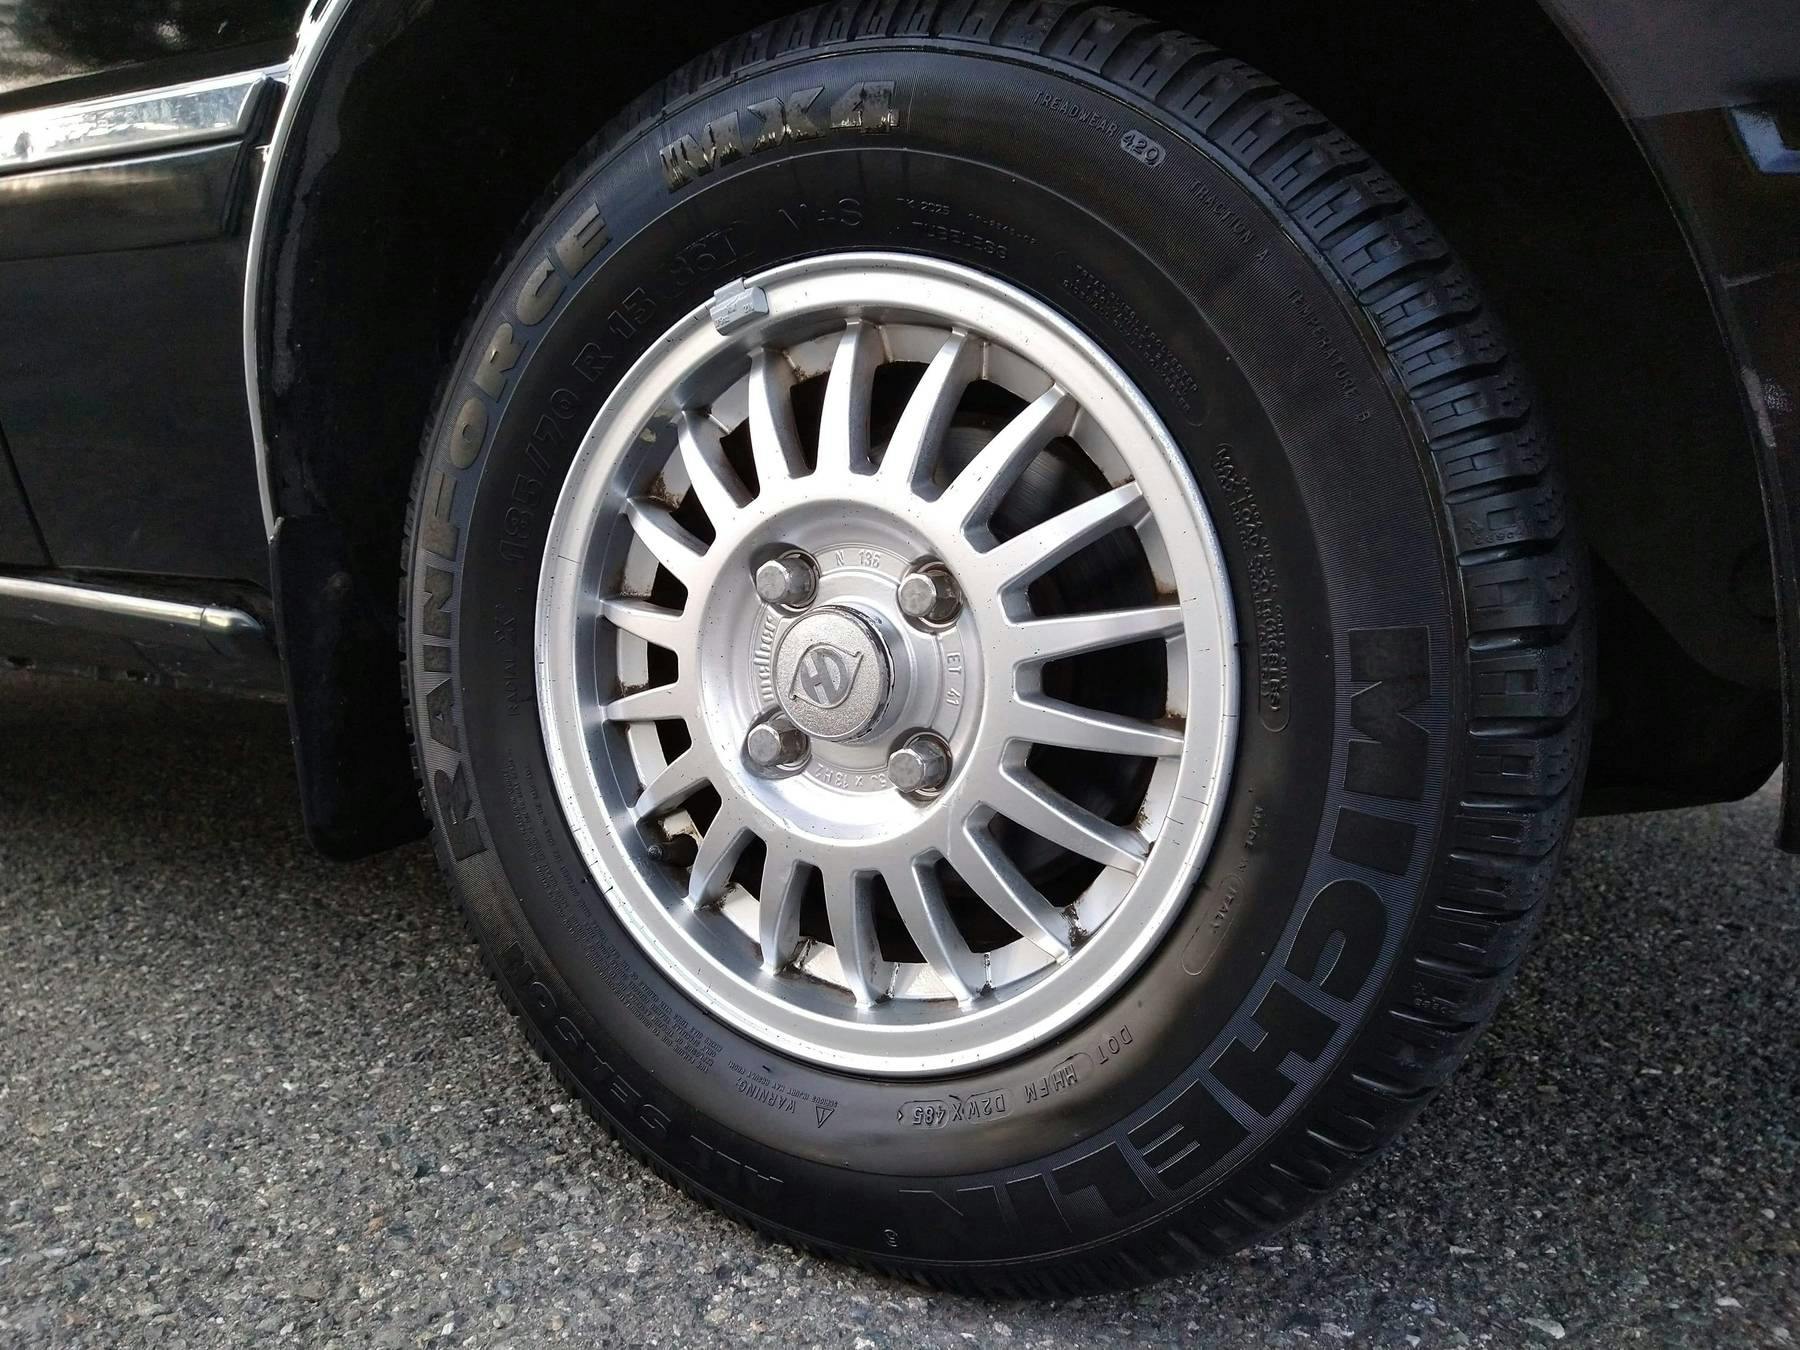 1986 Hyundai Stellar Executive wheel and tire